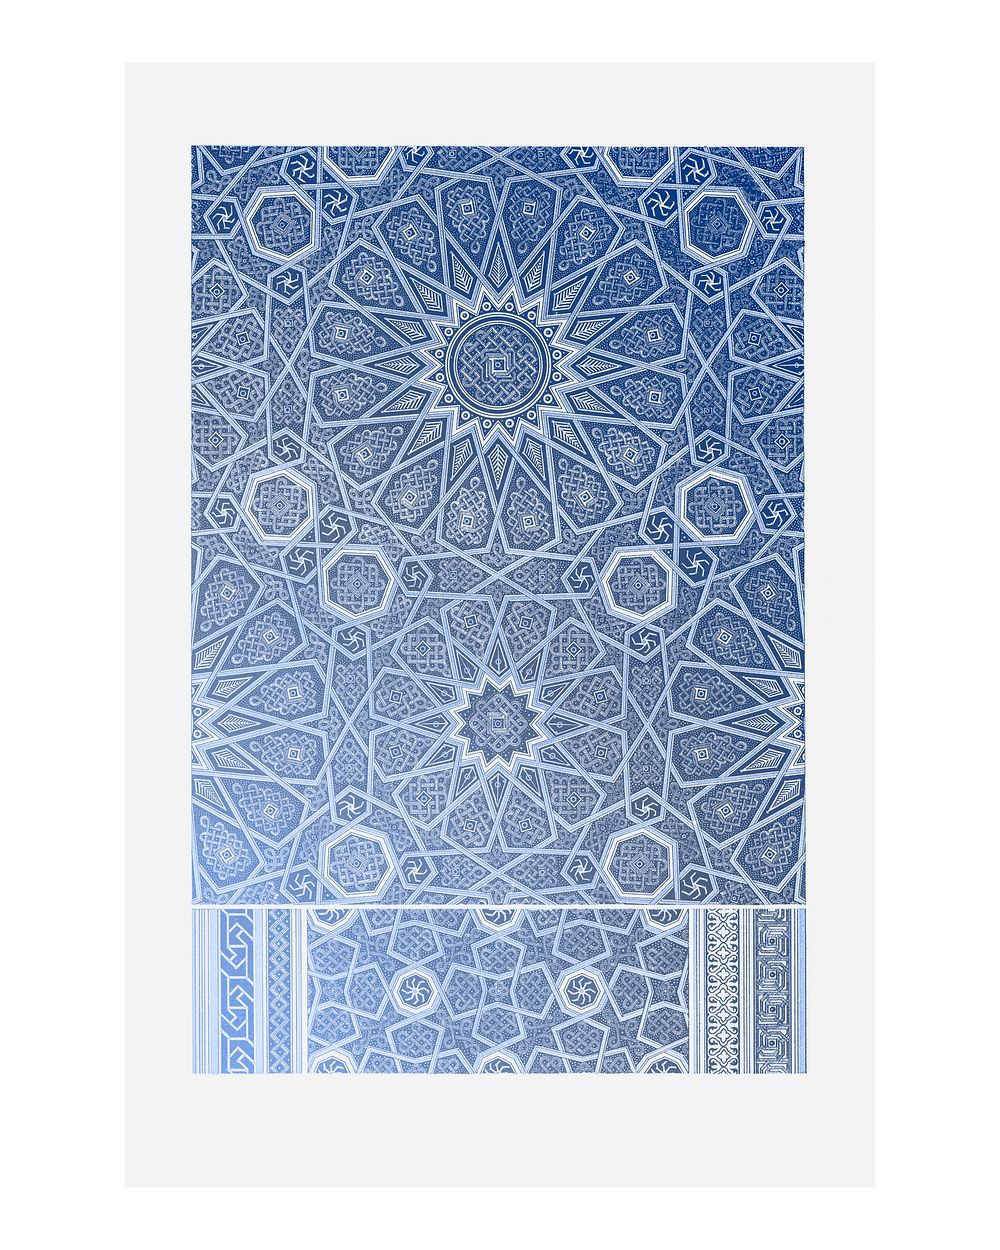 Blue Arabian pattern vintage illustration wall art print and poster design remix from original artwork